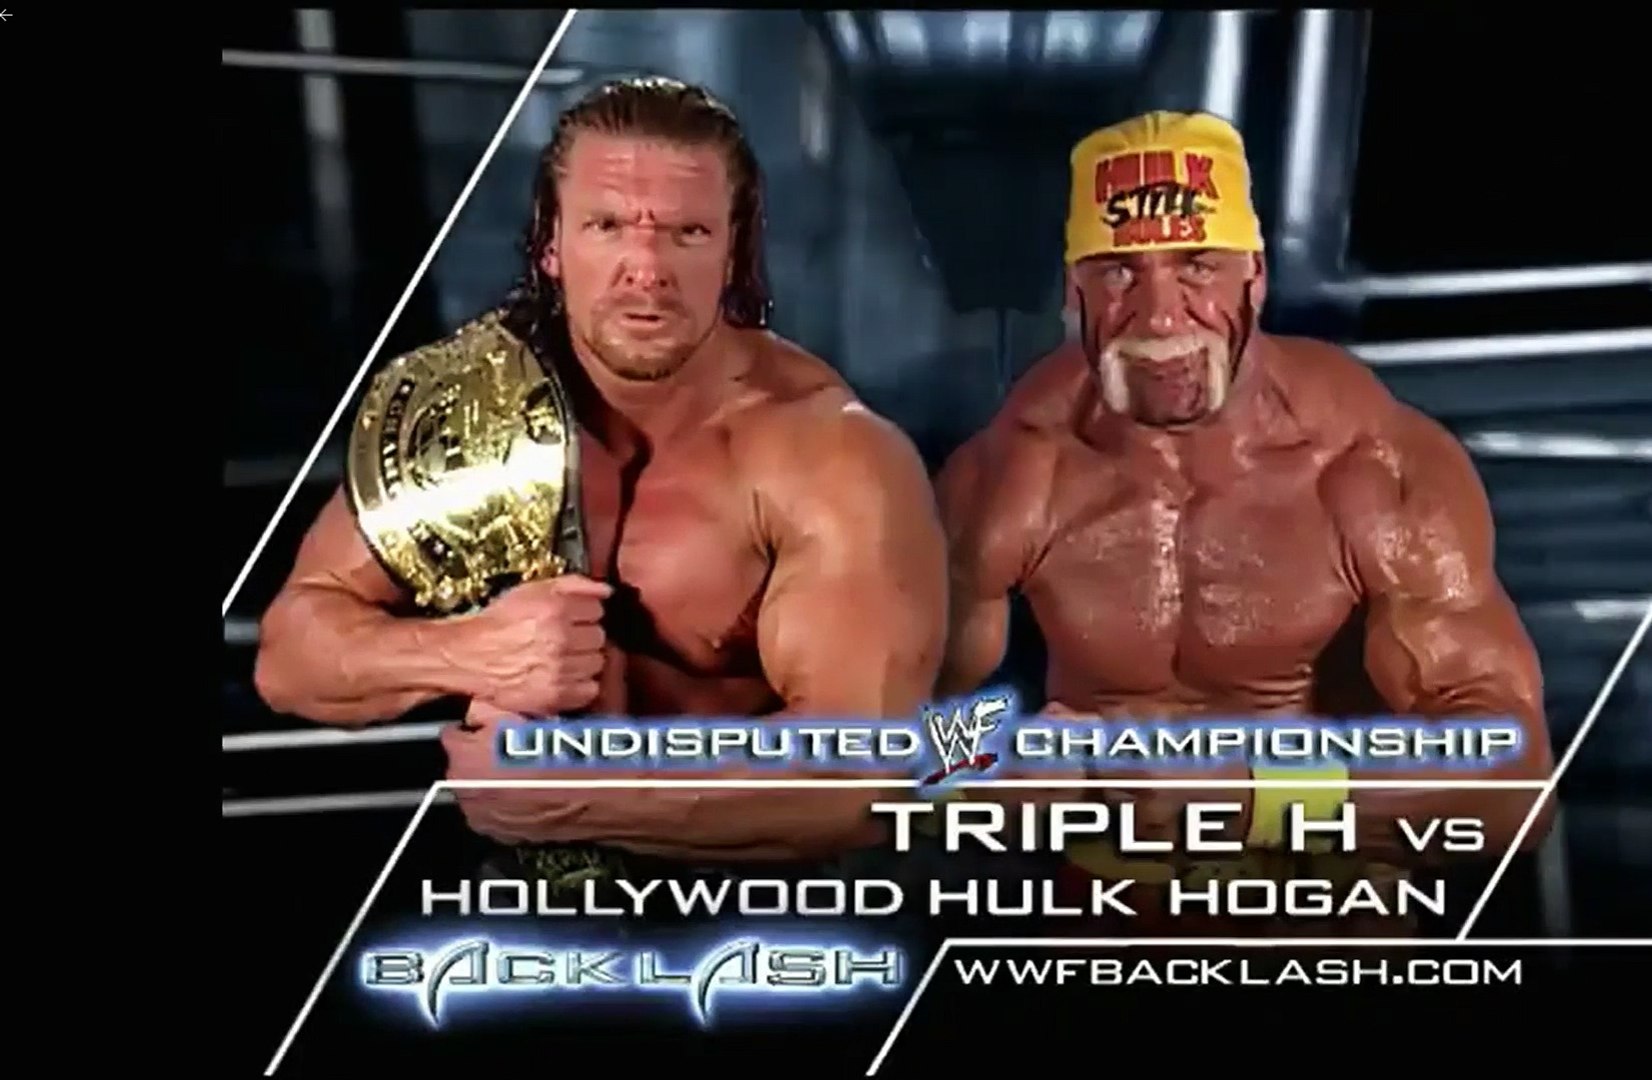 Wwe Backlash 2002 - Triple H(c) Vs Hollywood Hulk Hogan -undsiputed  Championship - Official Promo - video Dailymotion